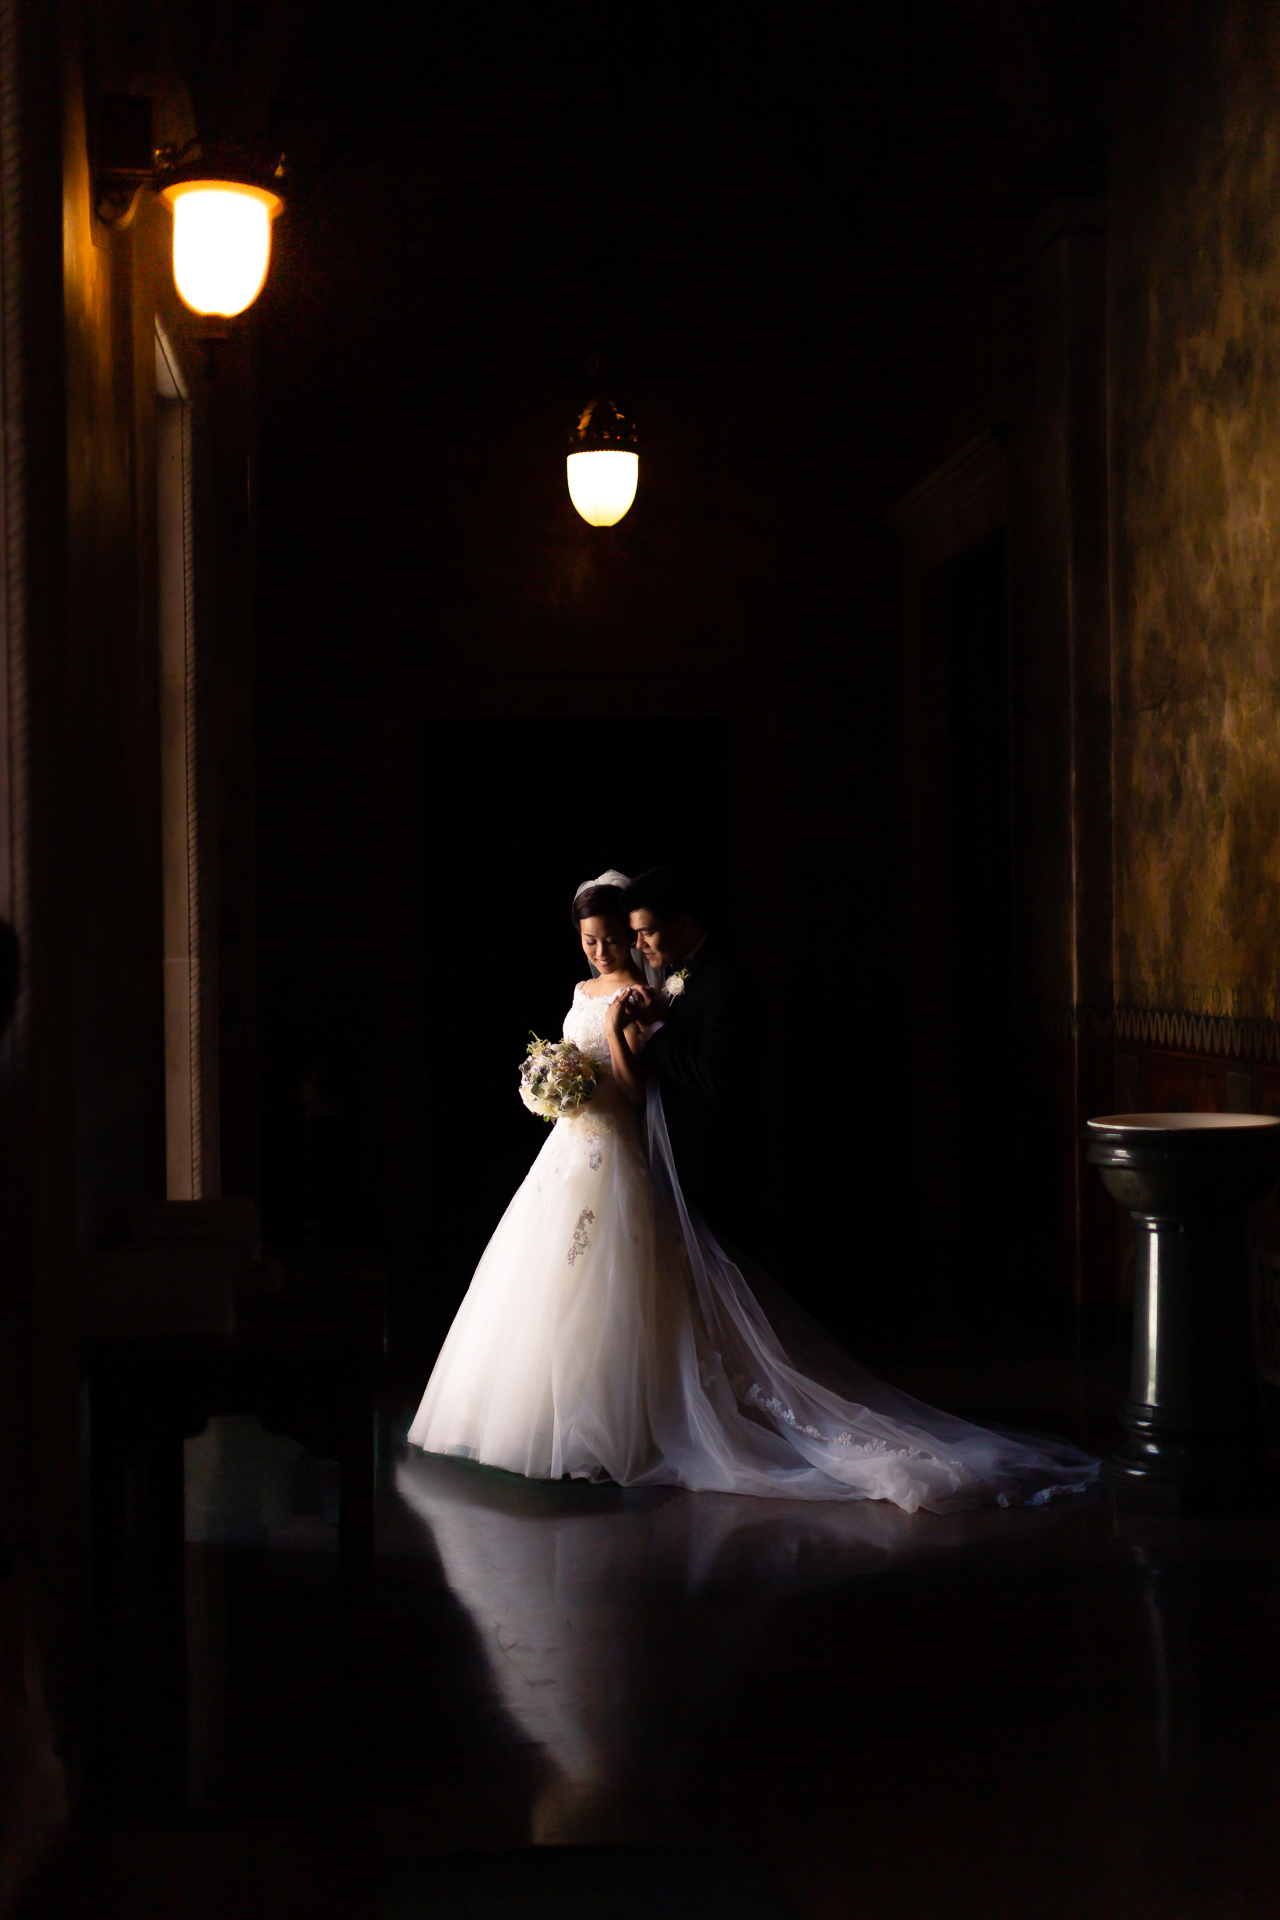 ThomasKim_photography Los Angeles Wedding Photographer captures a bride and groom's portrait in a dark hallway.